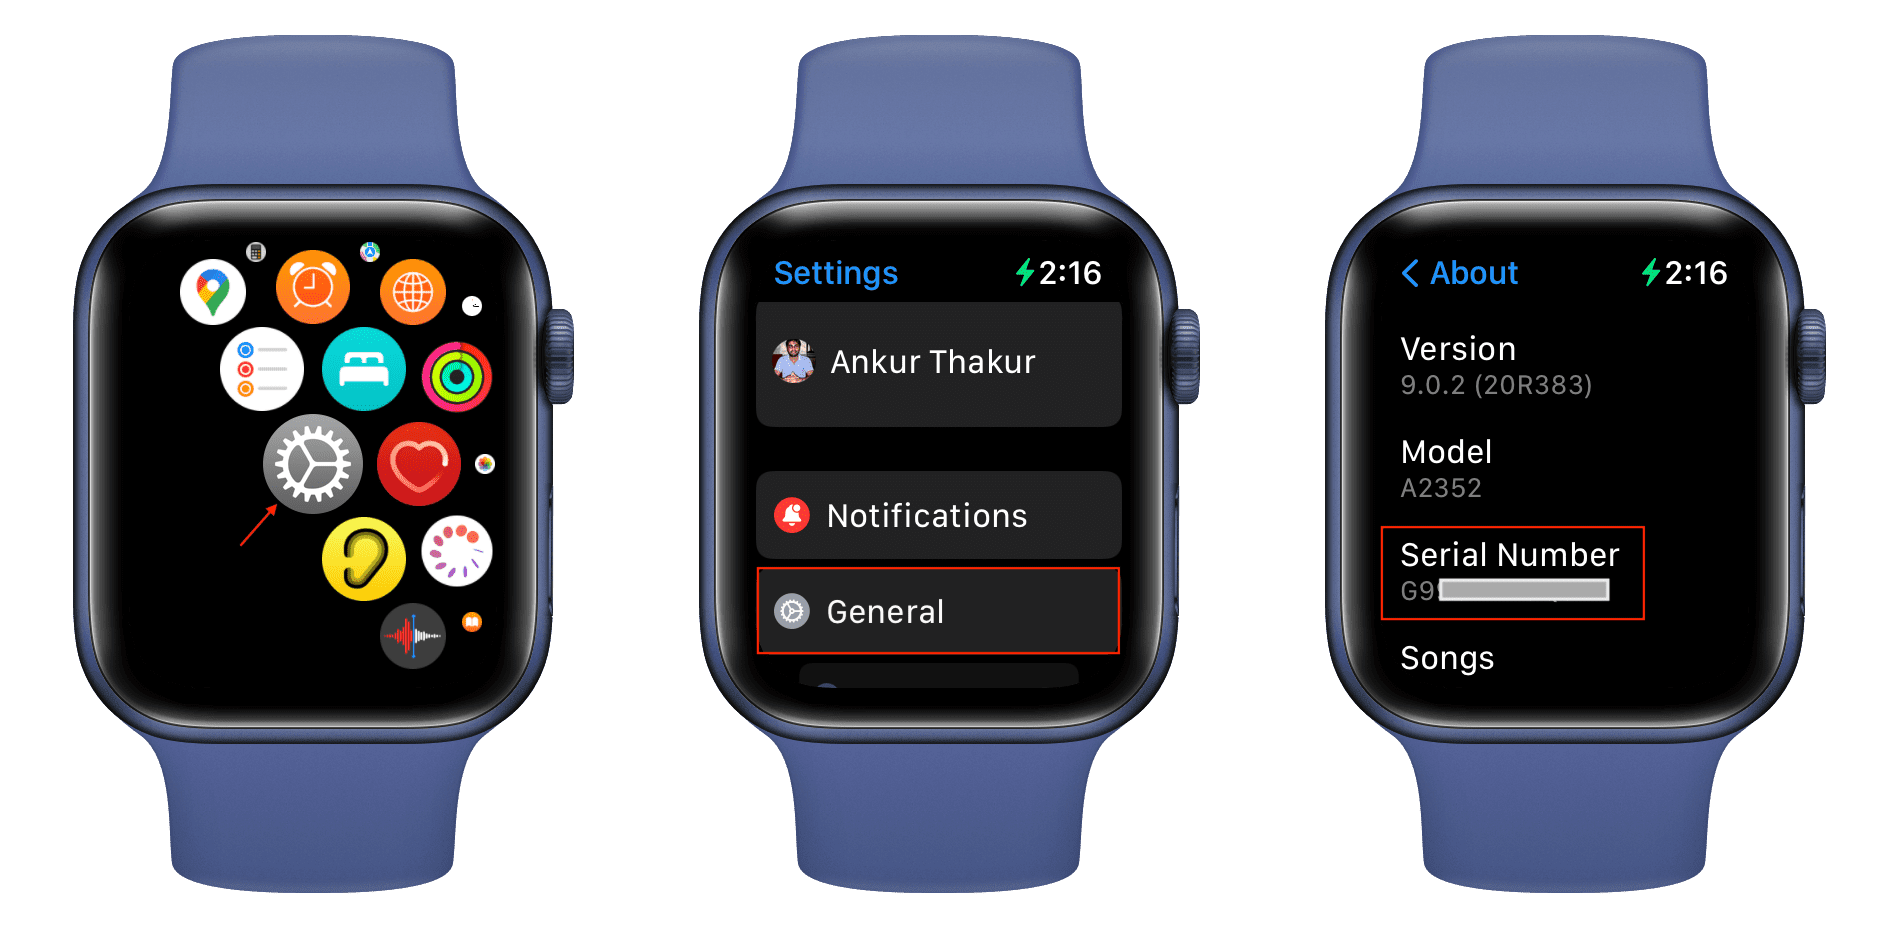 Find serial number in Apple Watch settings